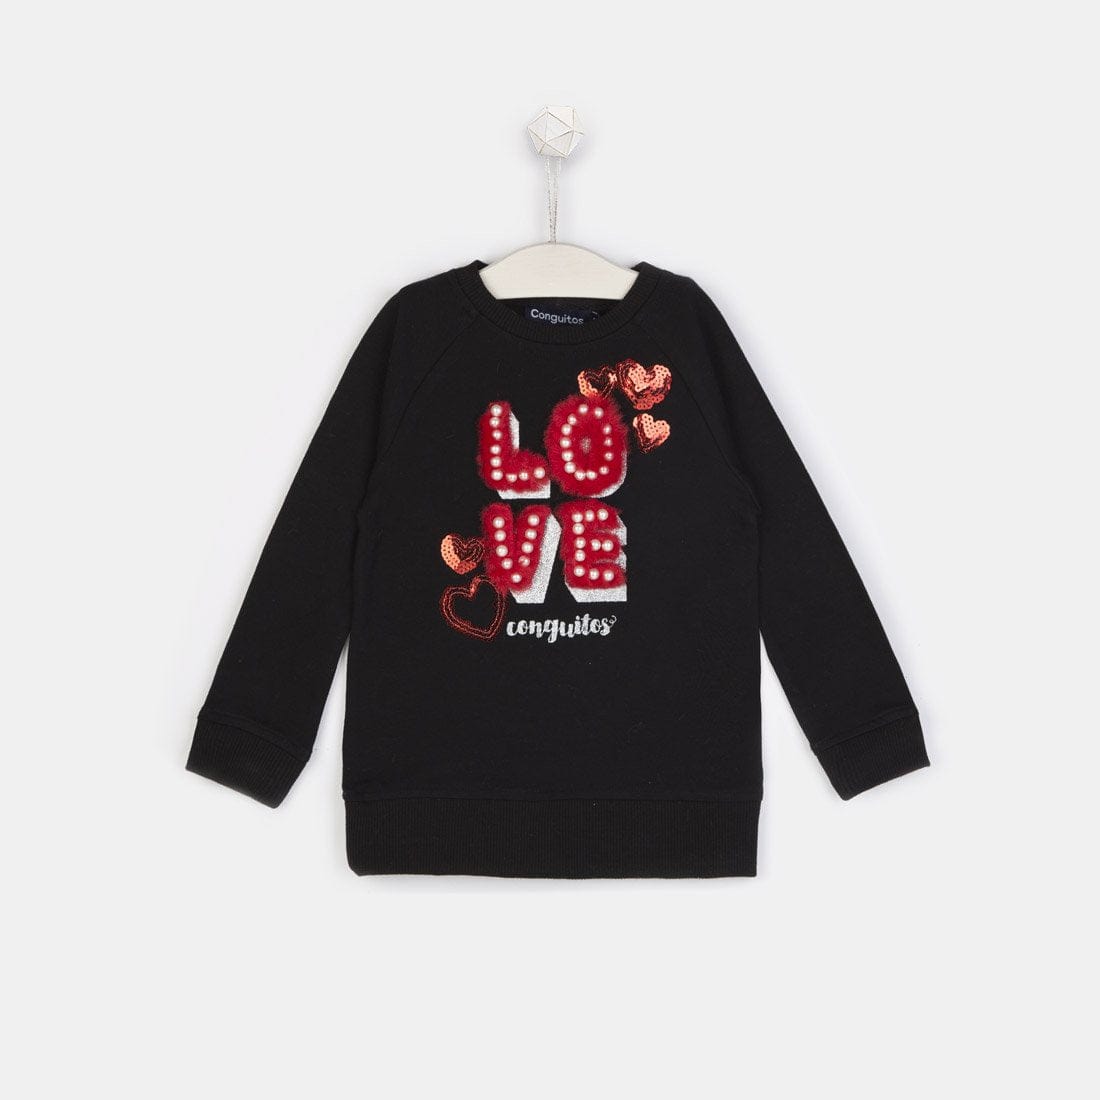 CONGUITOS TEXTIL Clothing Girls Love Black Sweatshirt